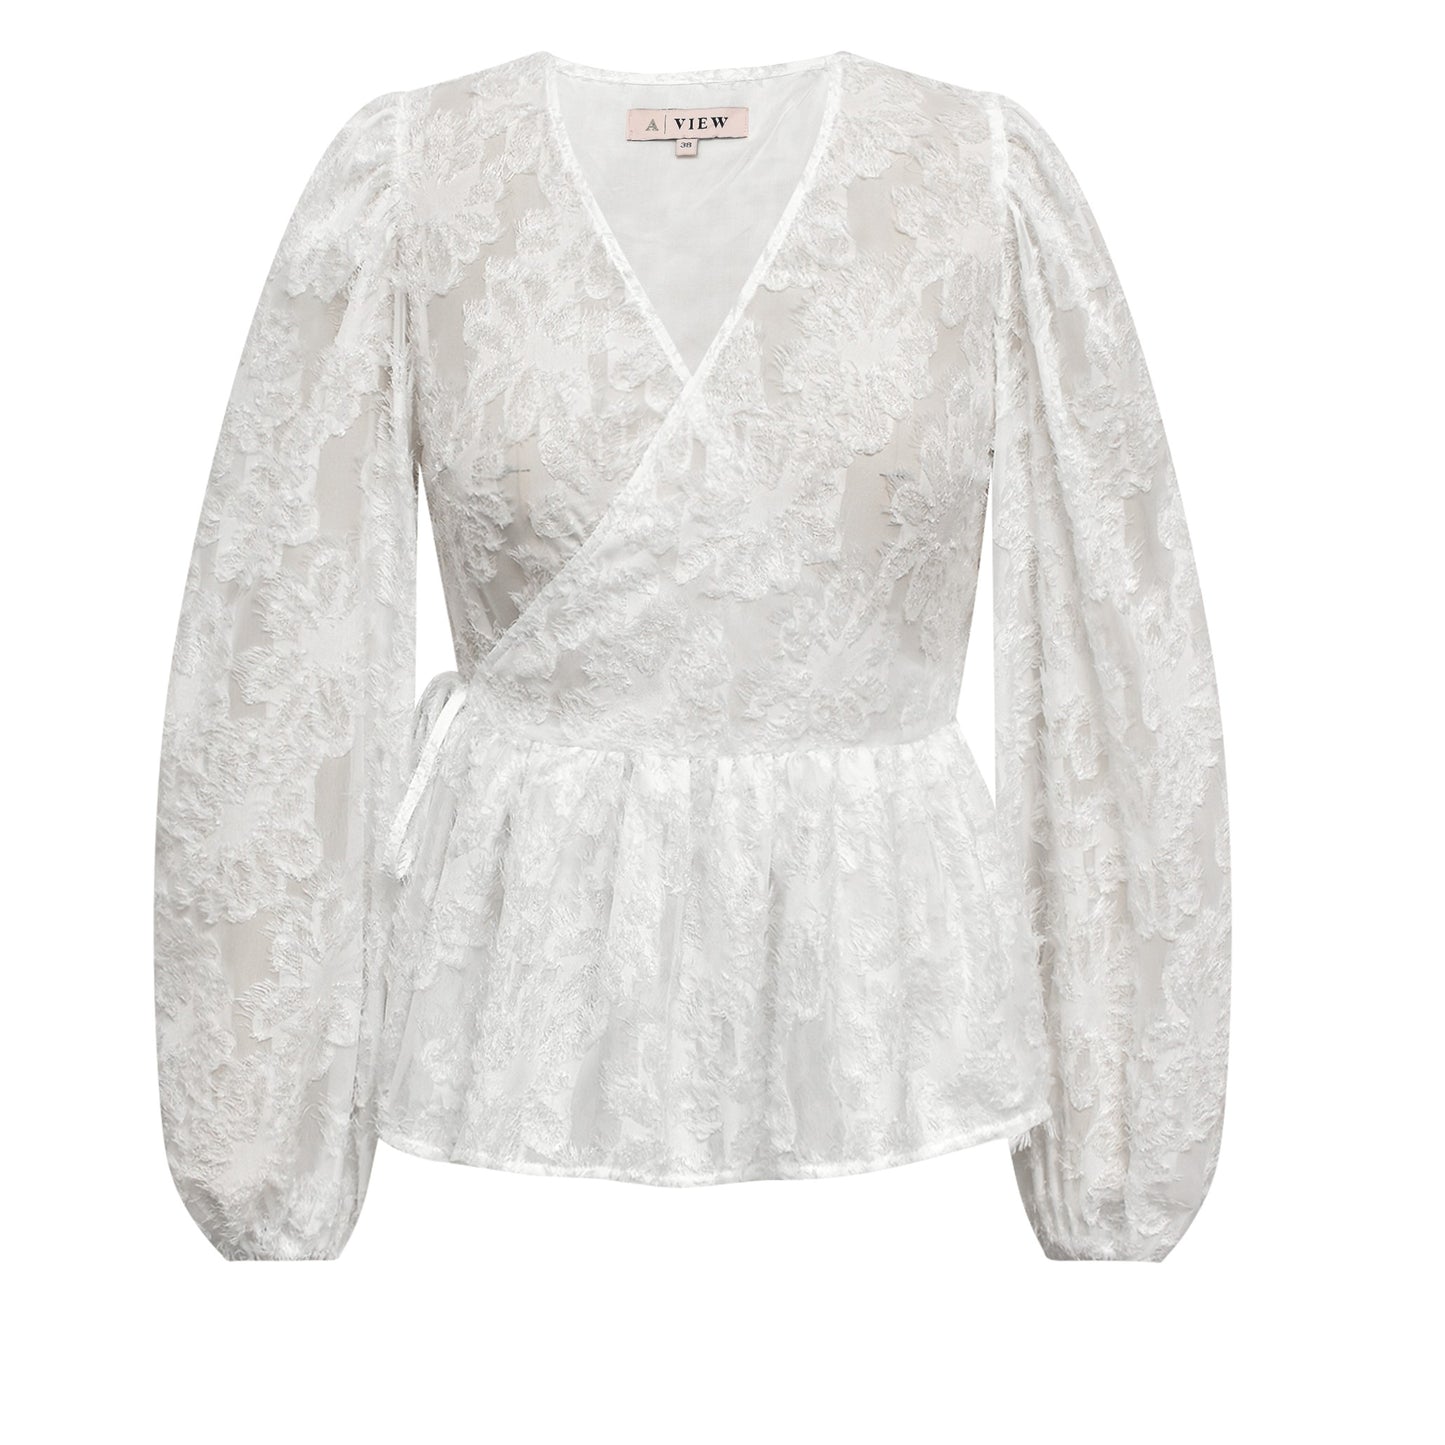 A-VIEW - Feana blouse - Hvid